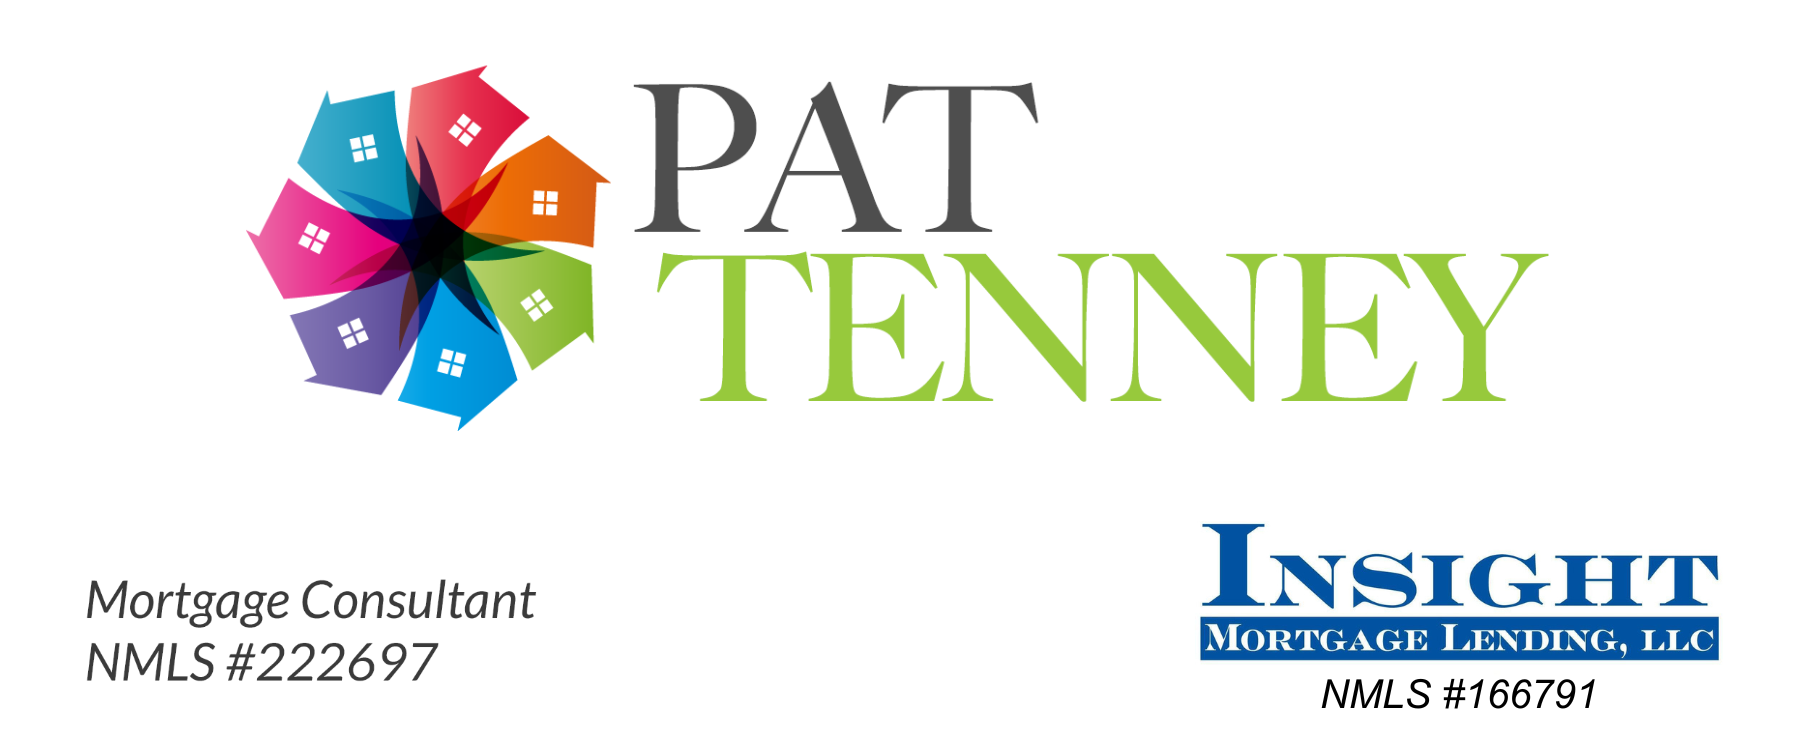 Pat Tenney Logo